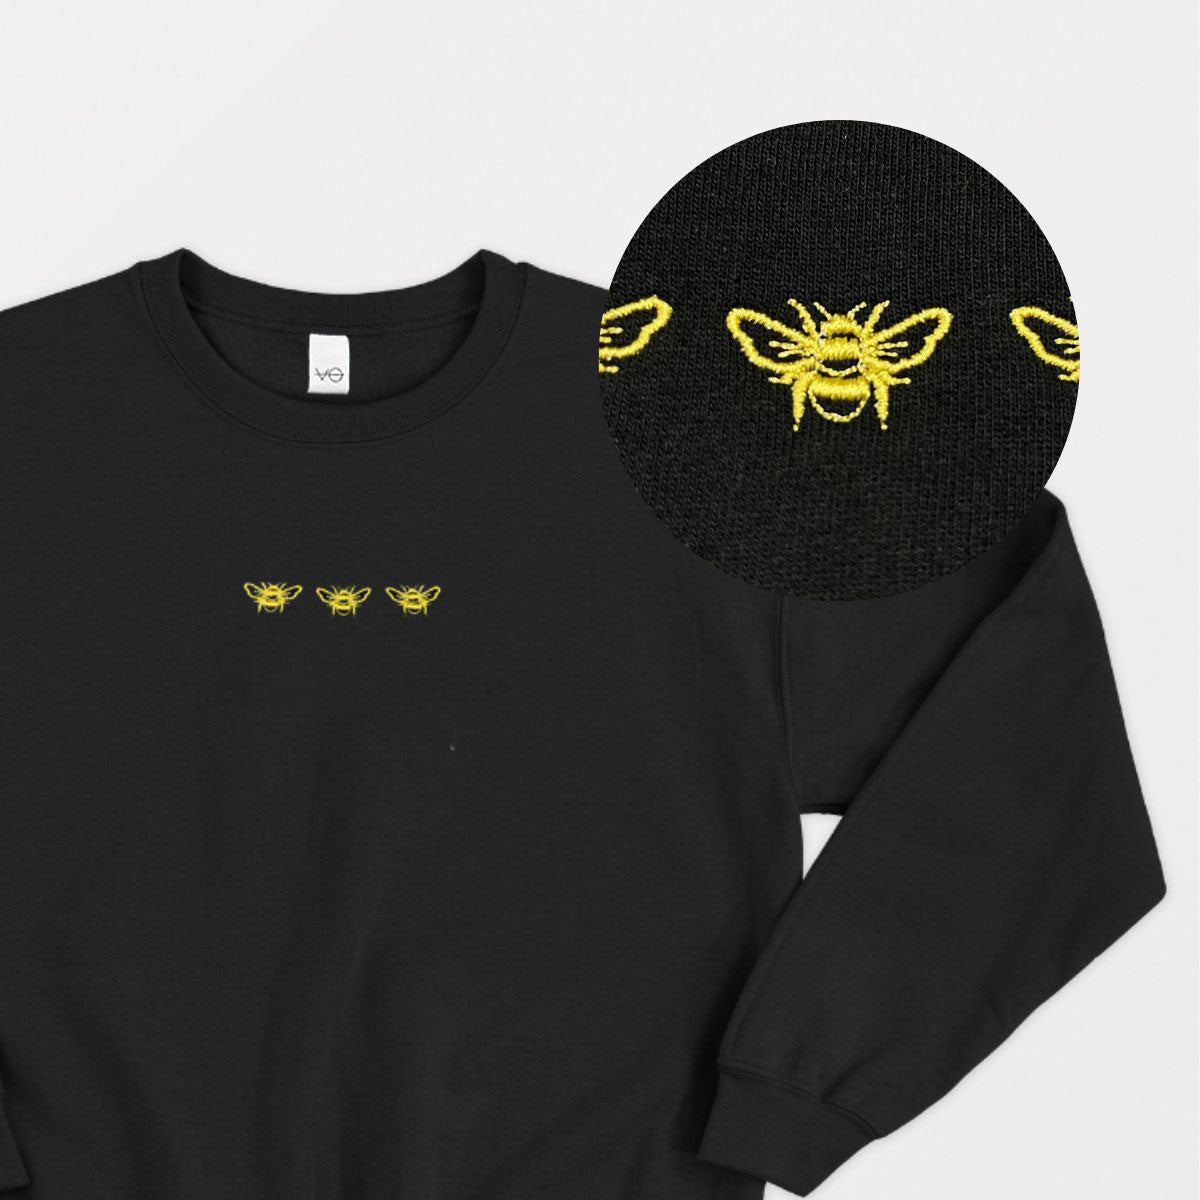 Bumble Bees Embroidered Ethical Vegan Sweatshirt (Unisex) product